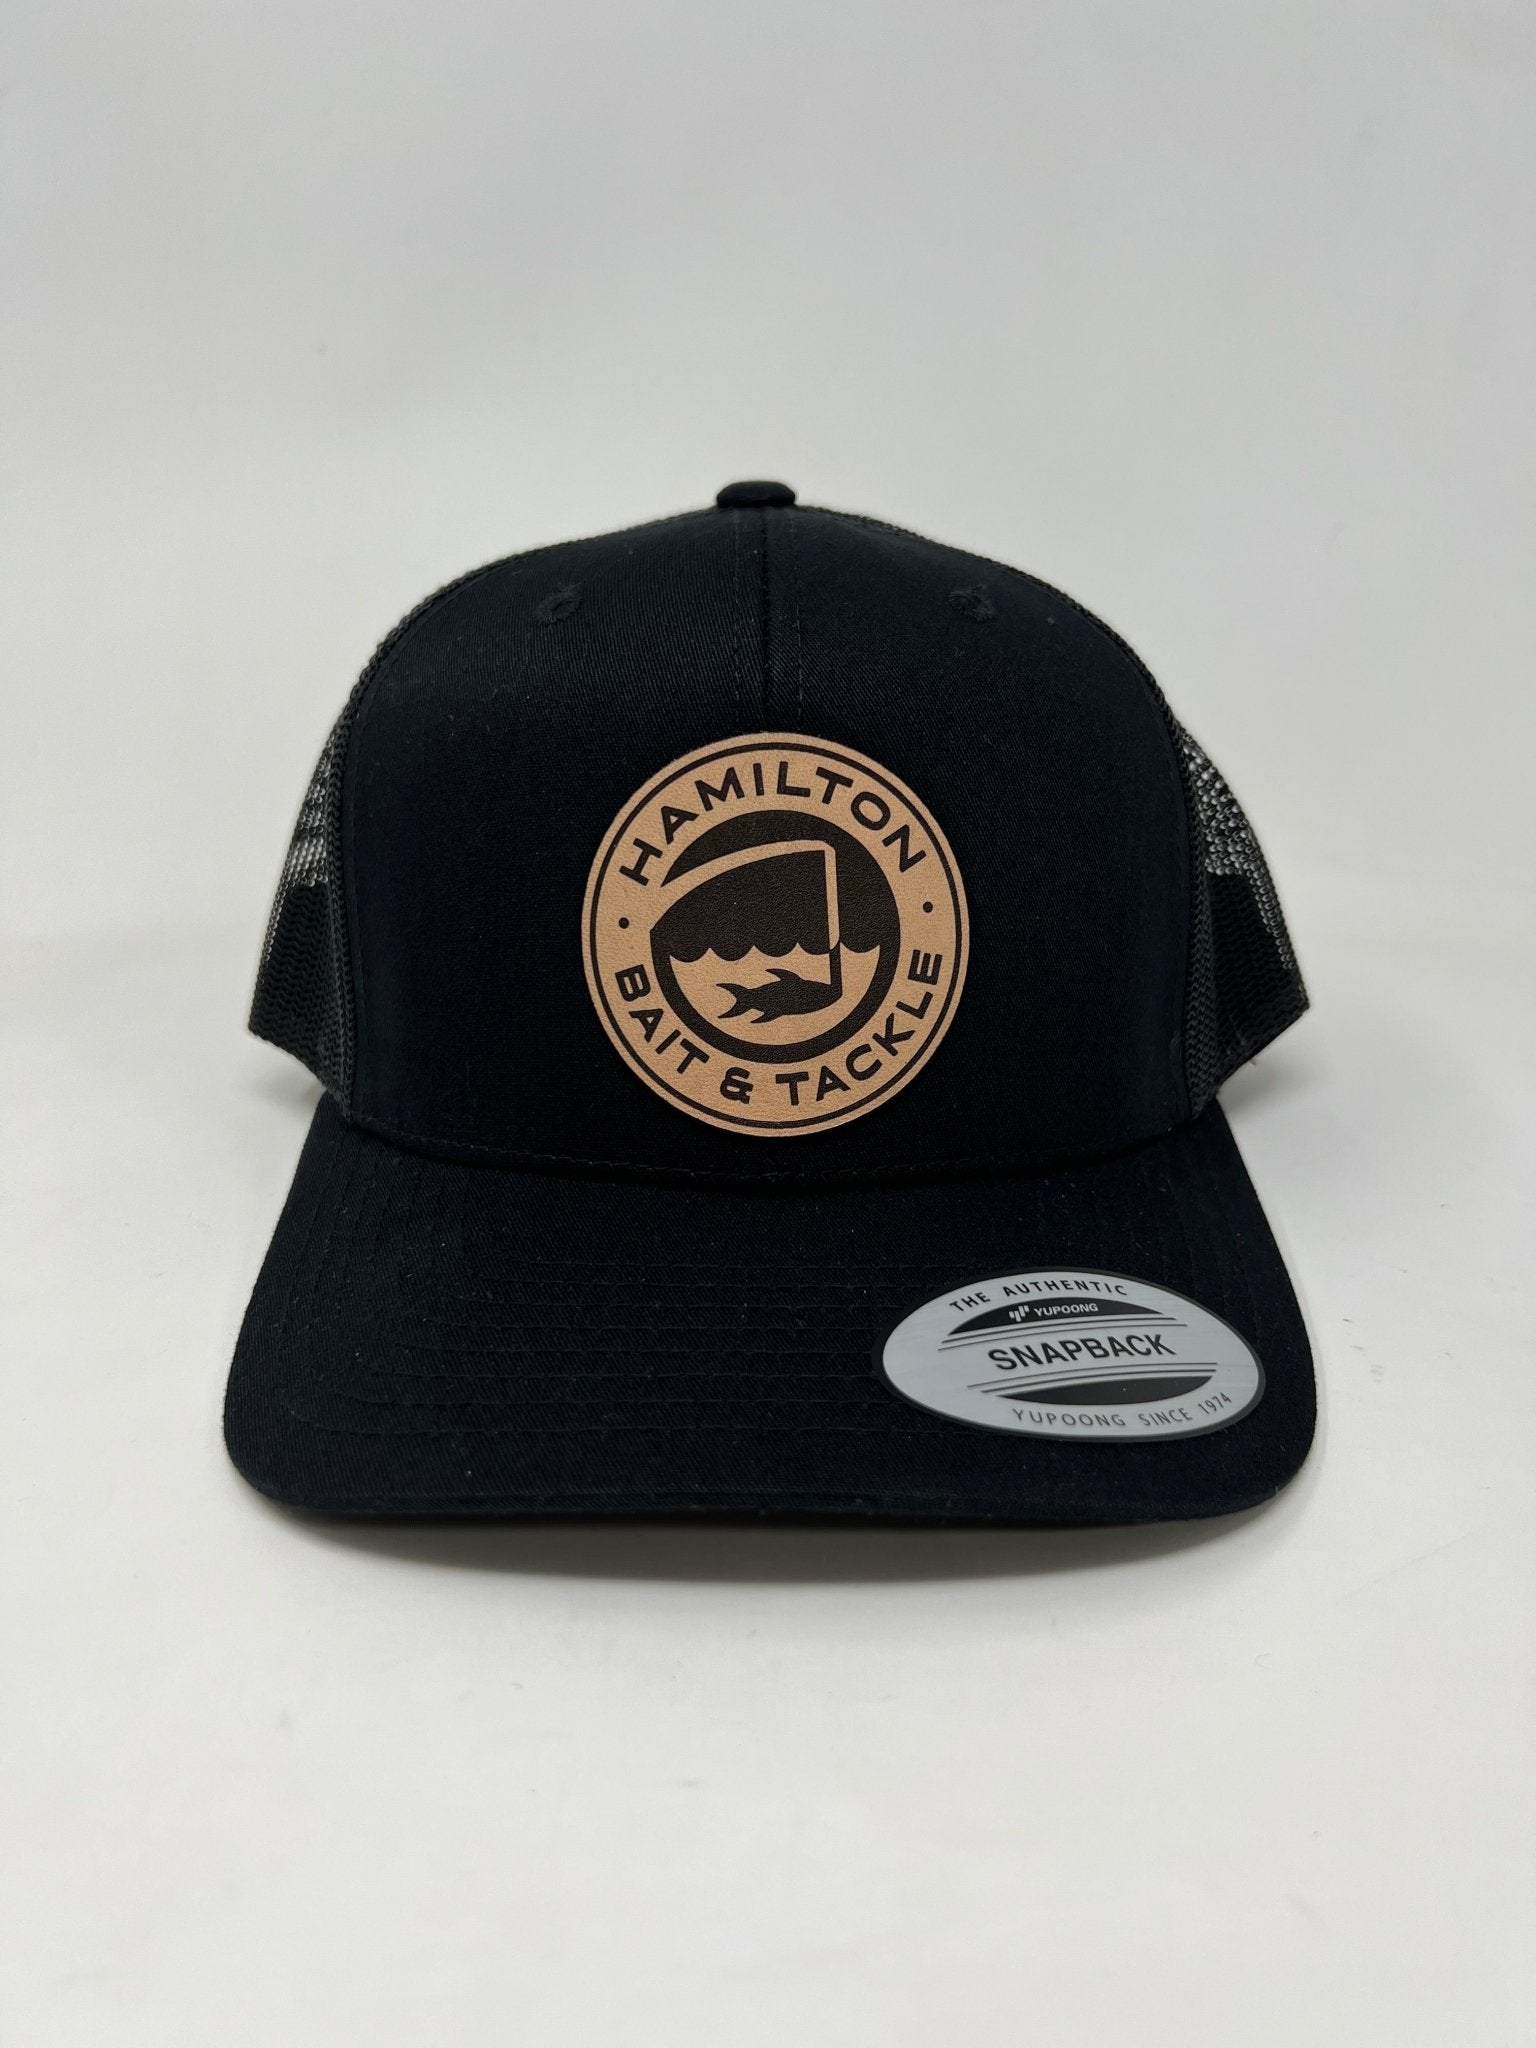 HBT Stitched Logo Hat Black/Neon Orange Mesh